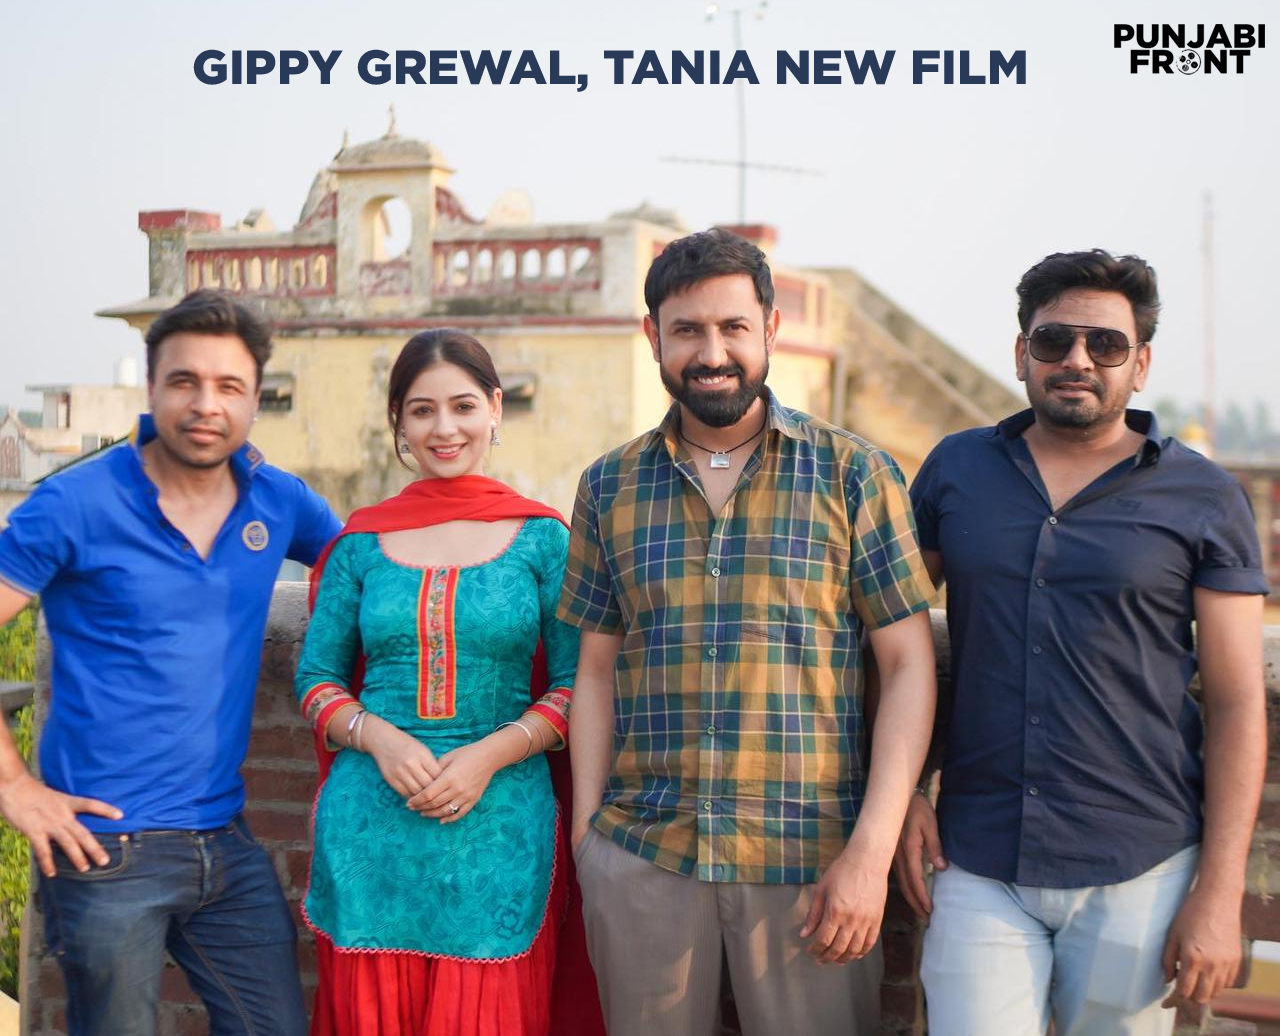 Gippy Grewal and tania new film directed by Pankaj Batra